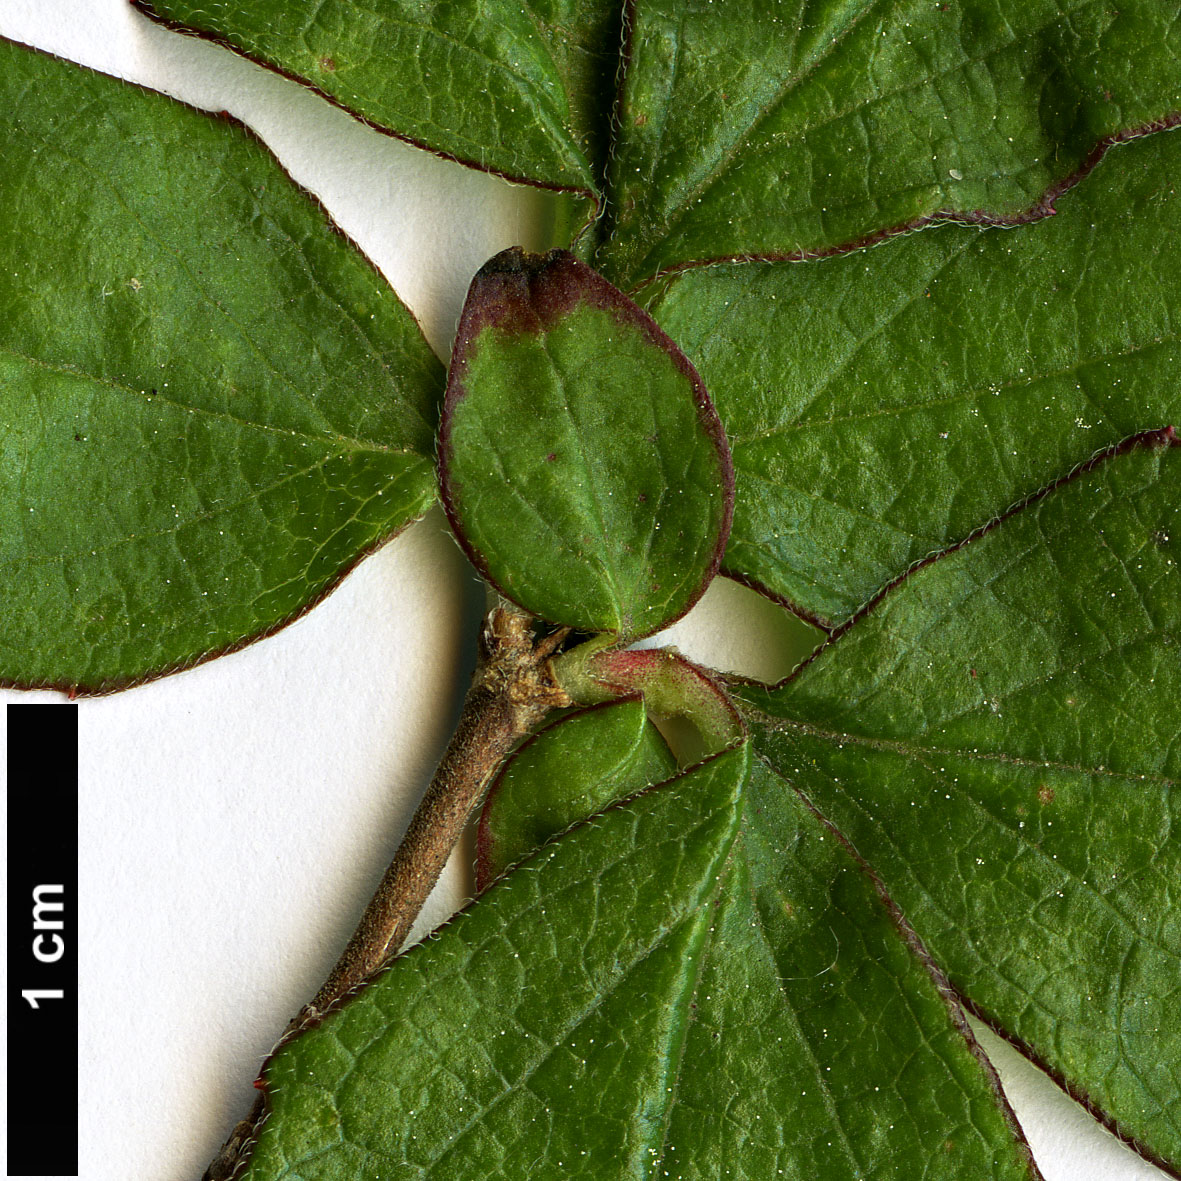 High resolution image: Family: Caprifoliaceae - Genus: Diabelia - Taxon: spathulata